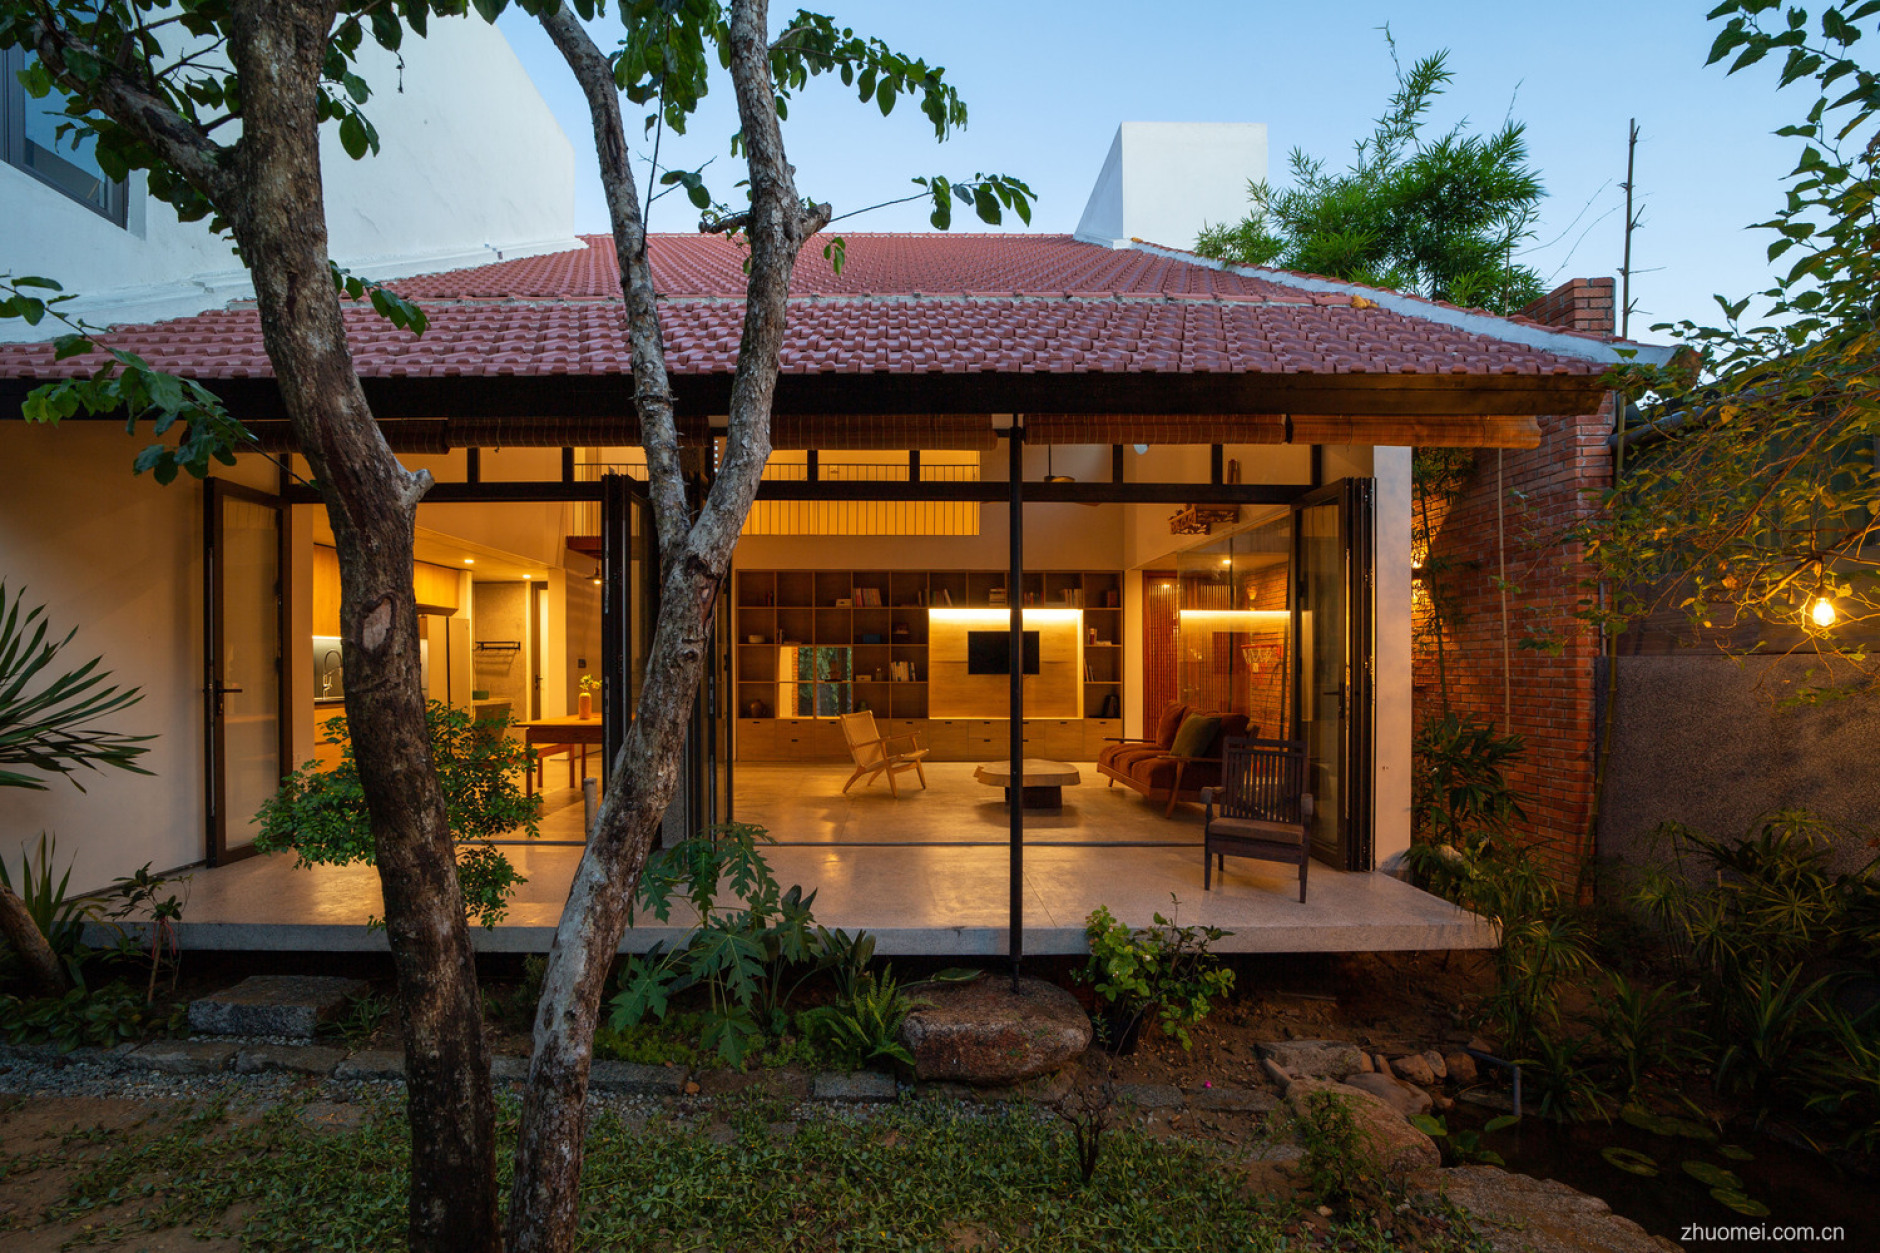 Dom Architect Studio丨The Tiamo House丨越南-57